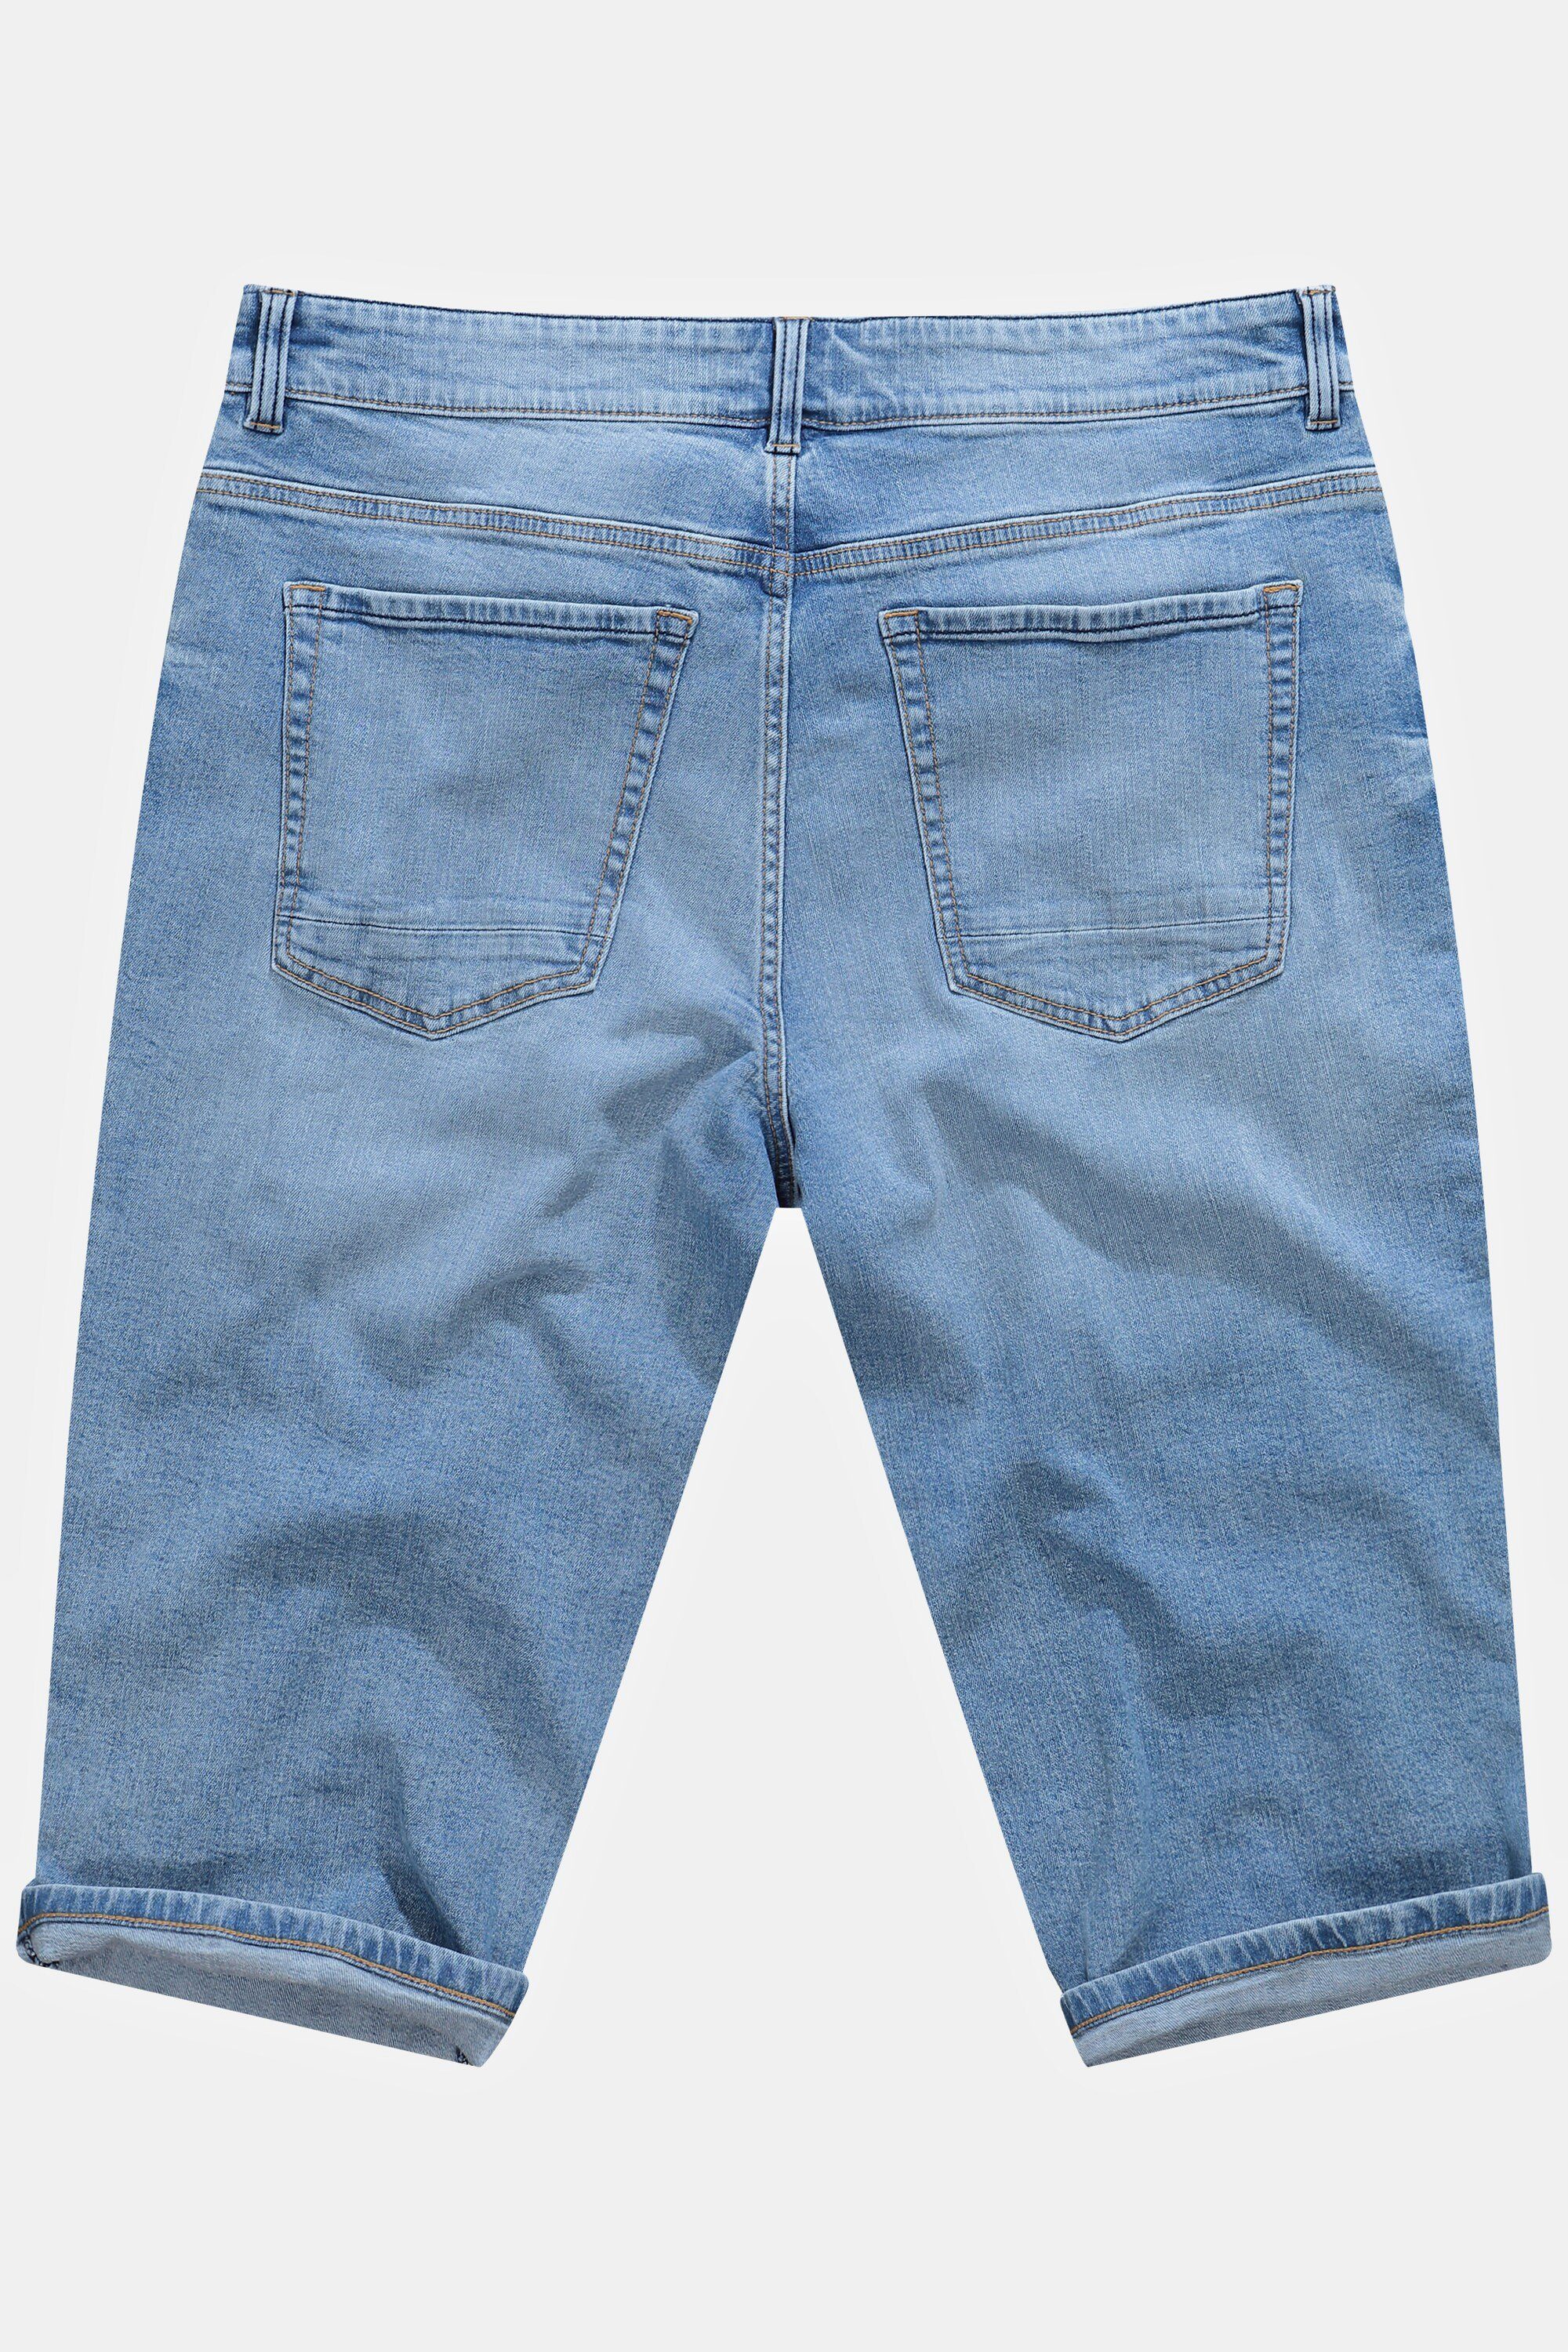 5-Pocket light Powerstretch blue Jeansbermudas 3/4-Jeans JP1880